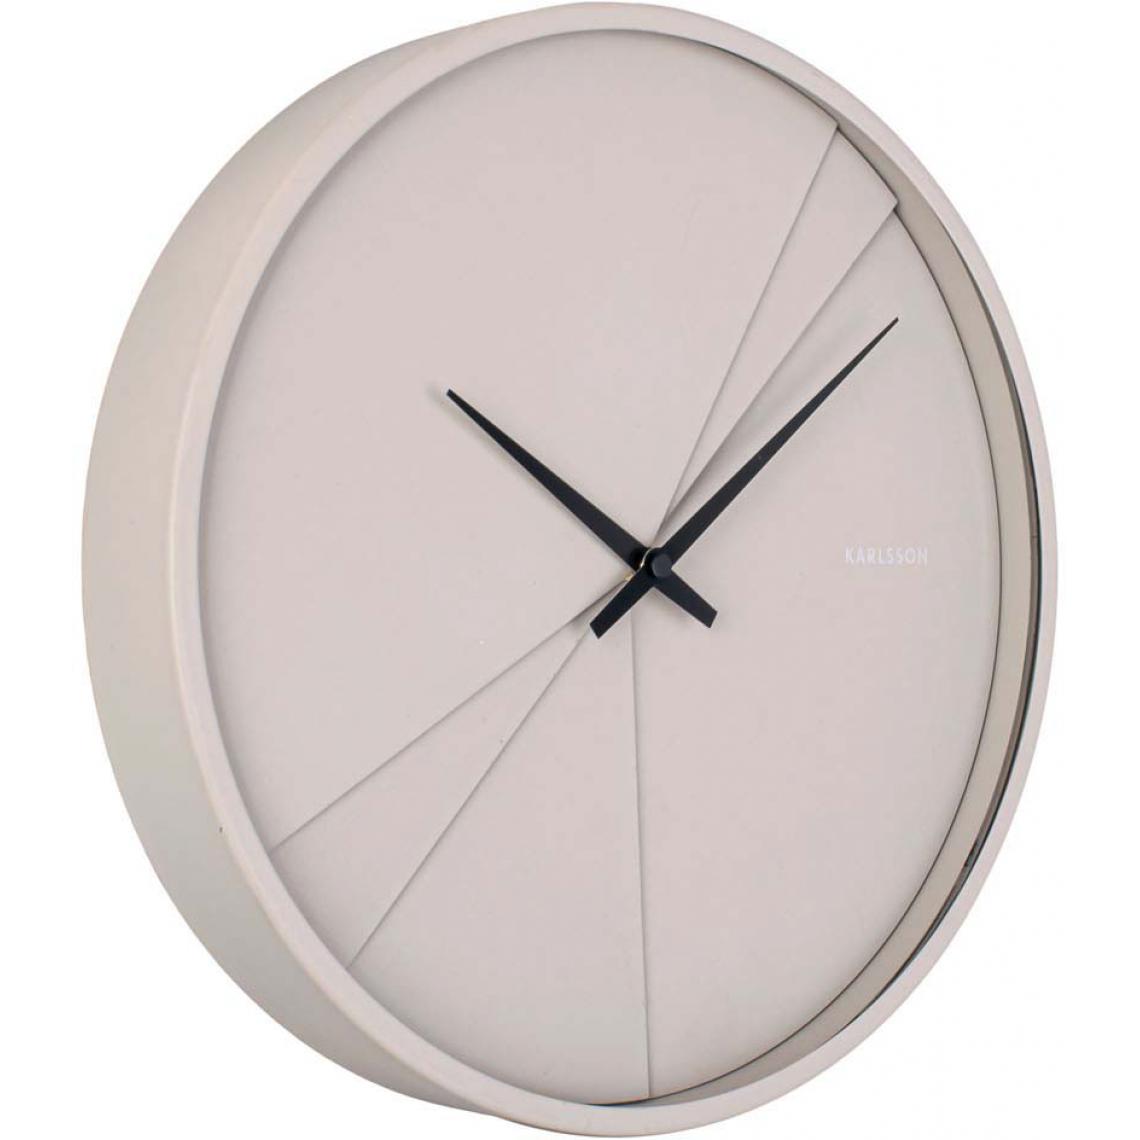 Karlsson - Horloge ronde en bois Lines 30 cm gris - Horloges, pendules